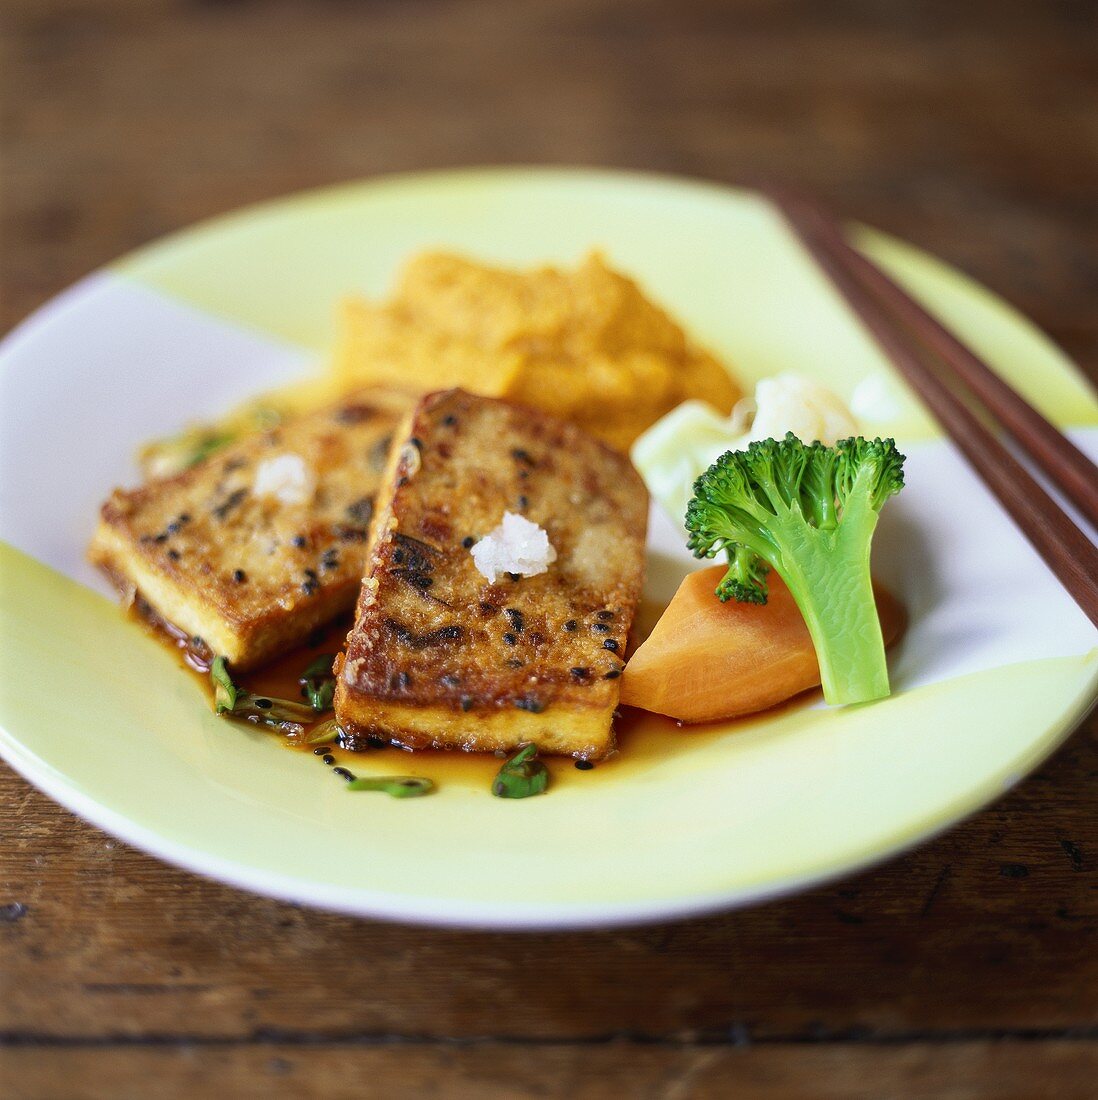 Fried tofu slices with black sesame